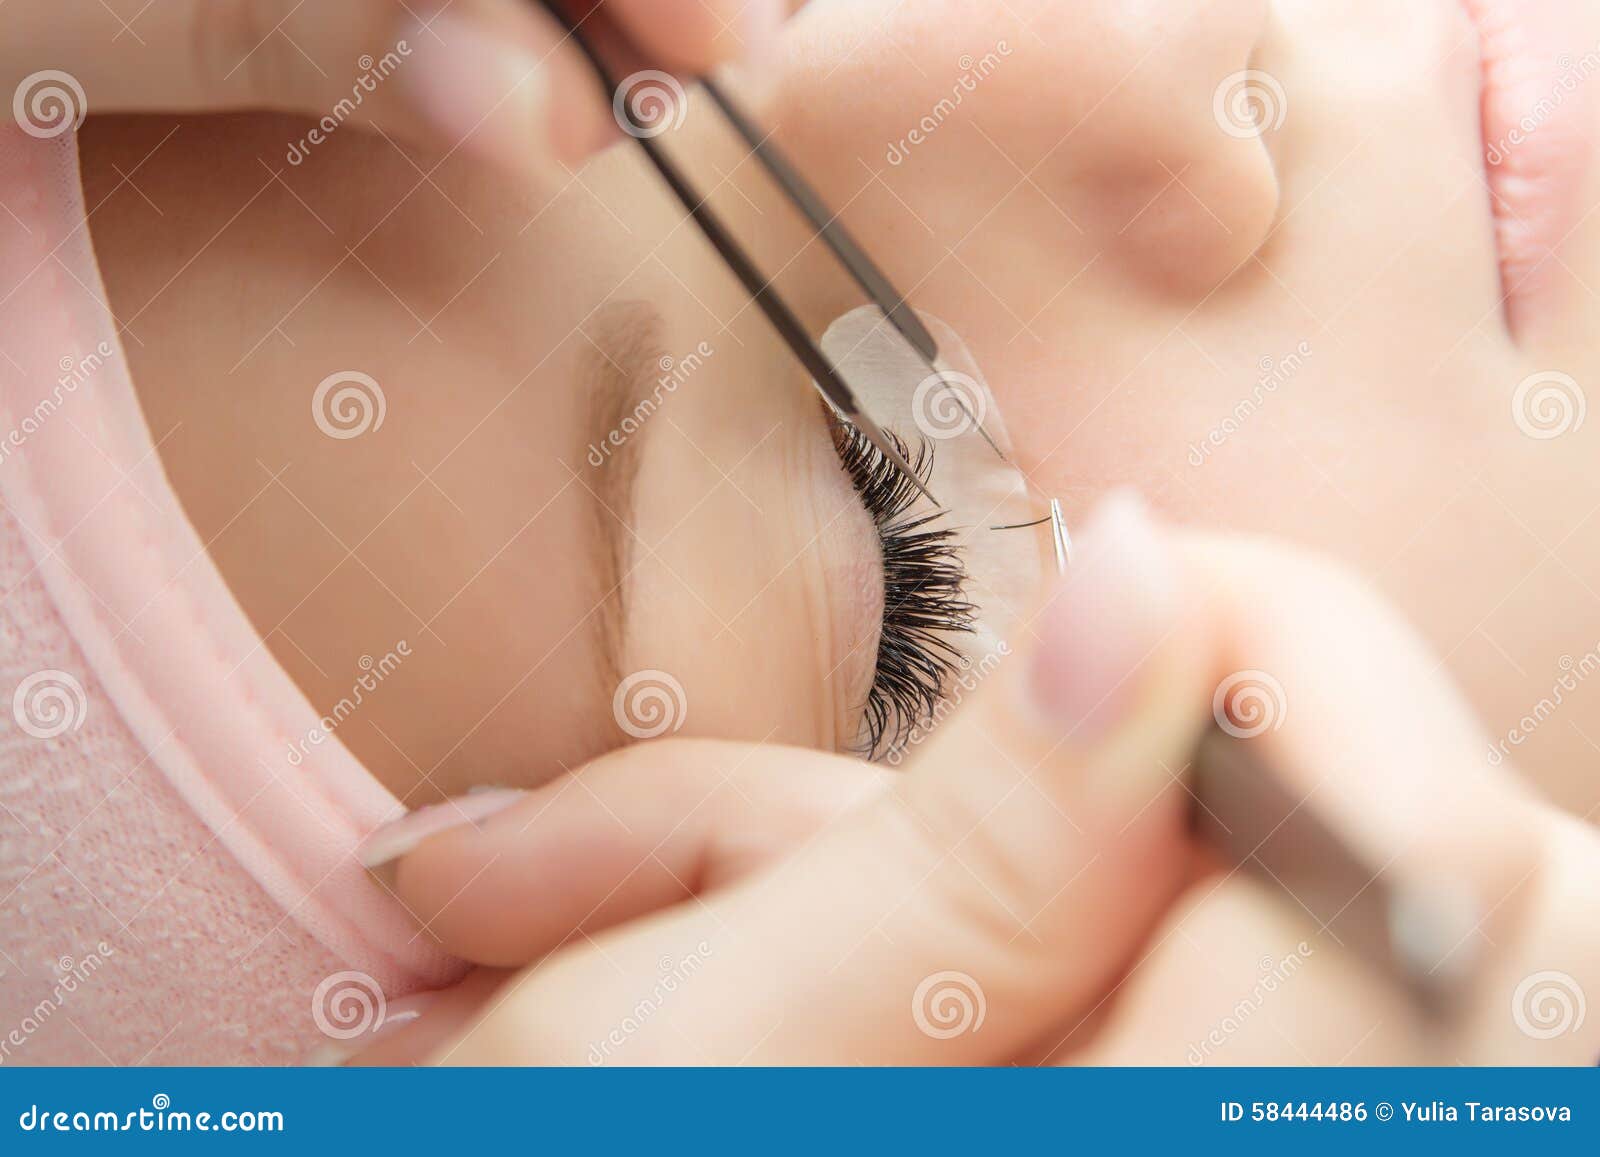 eyelash extension procedure. woman eye with long eyelashes.